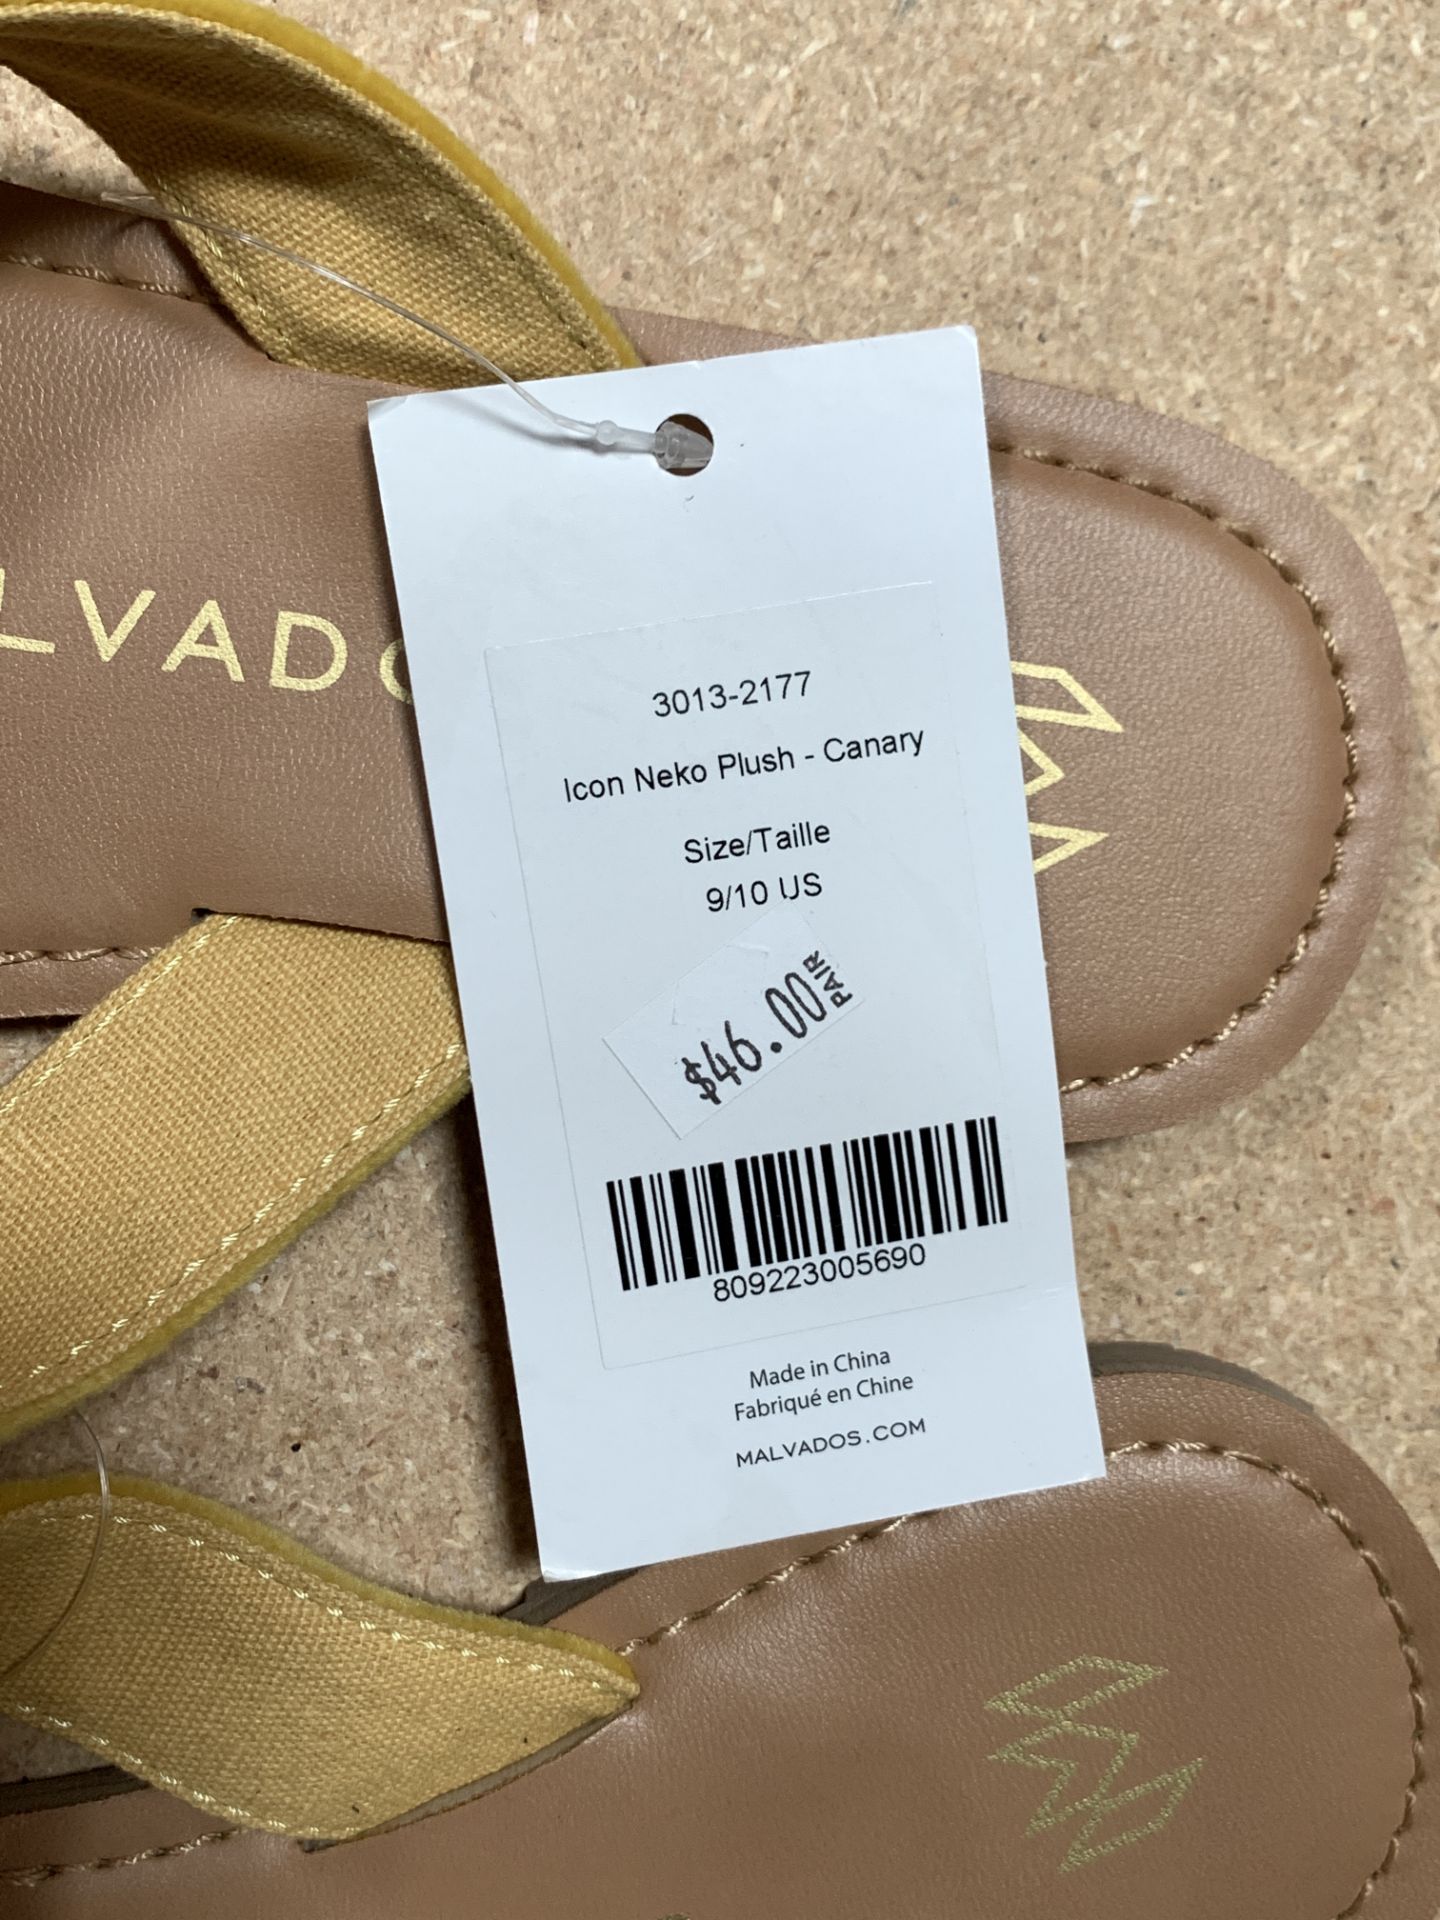 6 Pairs Malvados Flip Flop Sandals, New with Tags, Various Sizes, Icon Neko Plush (Retail $276) - Image 5 of 5